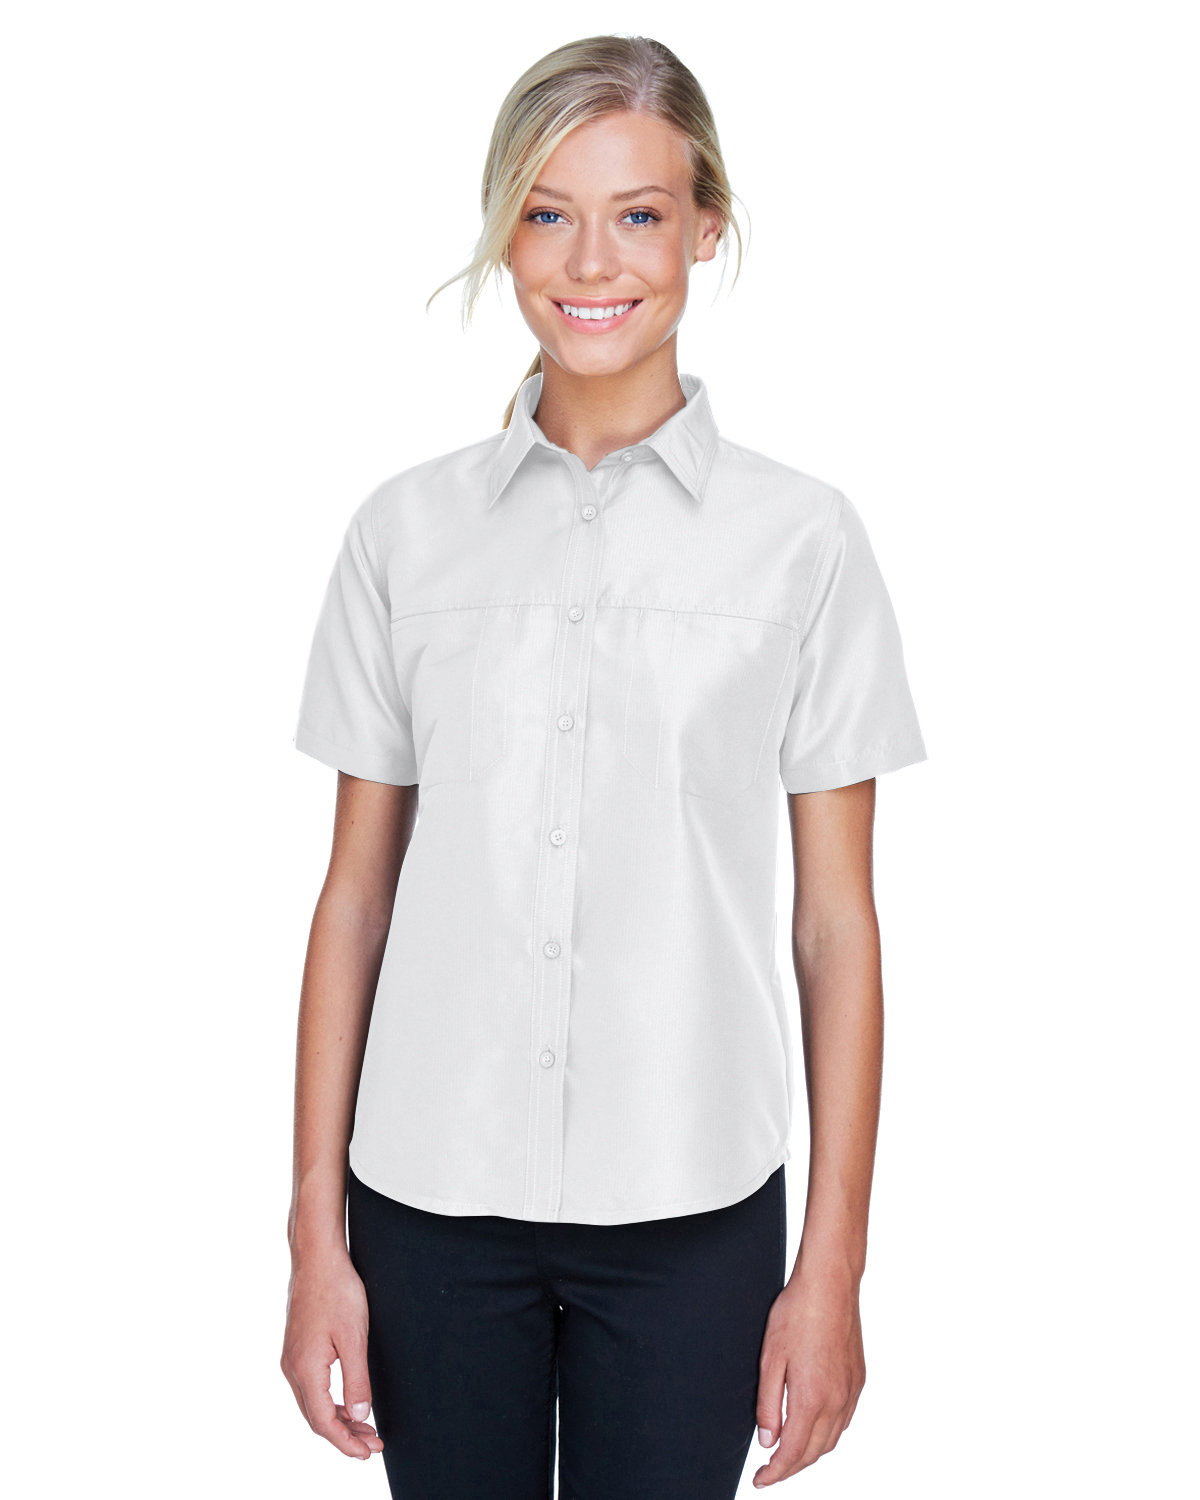 Ladies' Key West Short-Sleeve Performance Staff Shirt - M580W